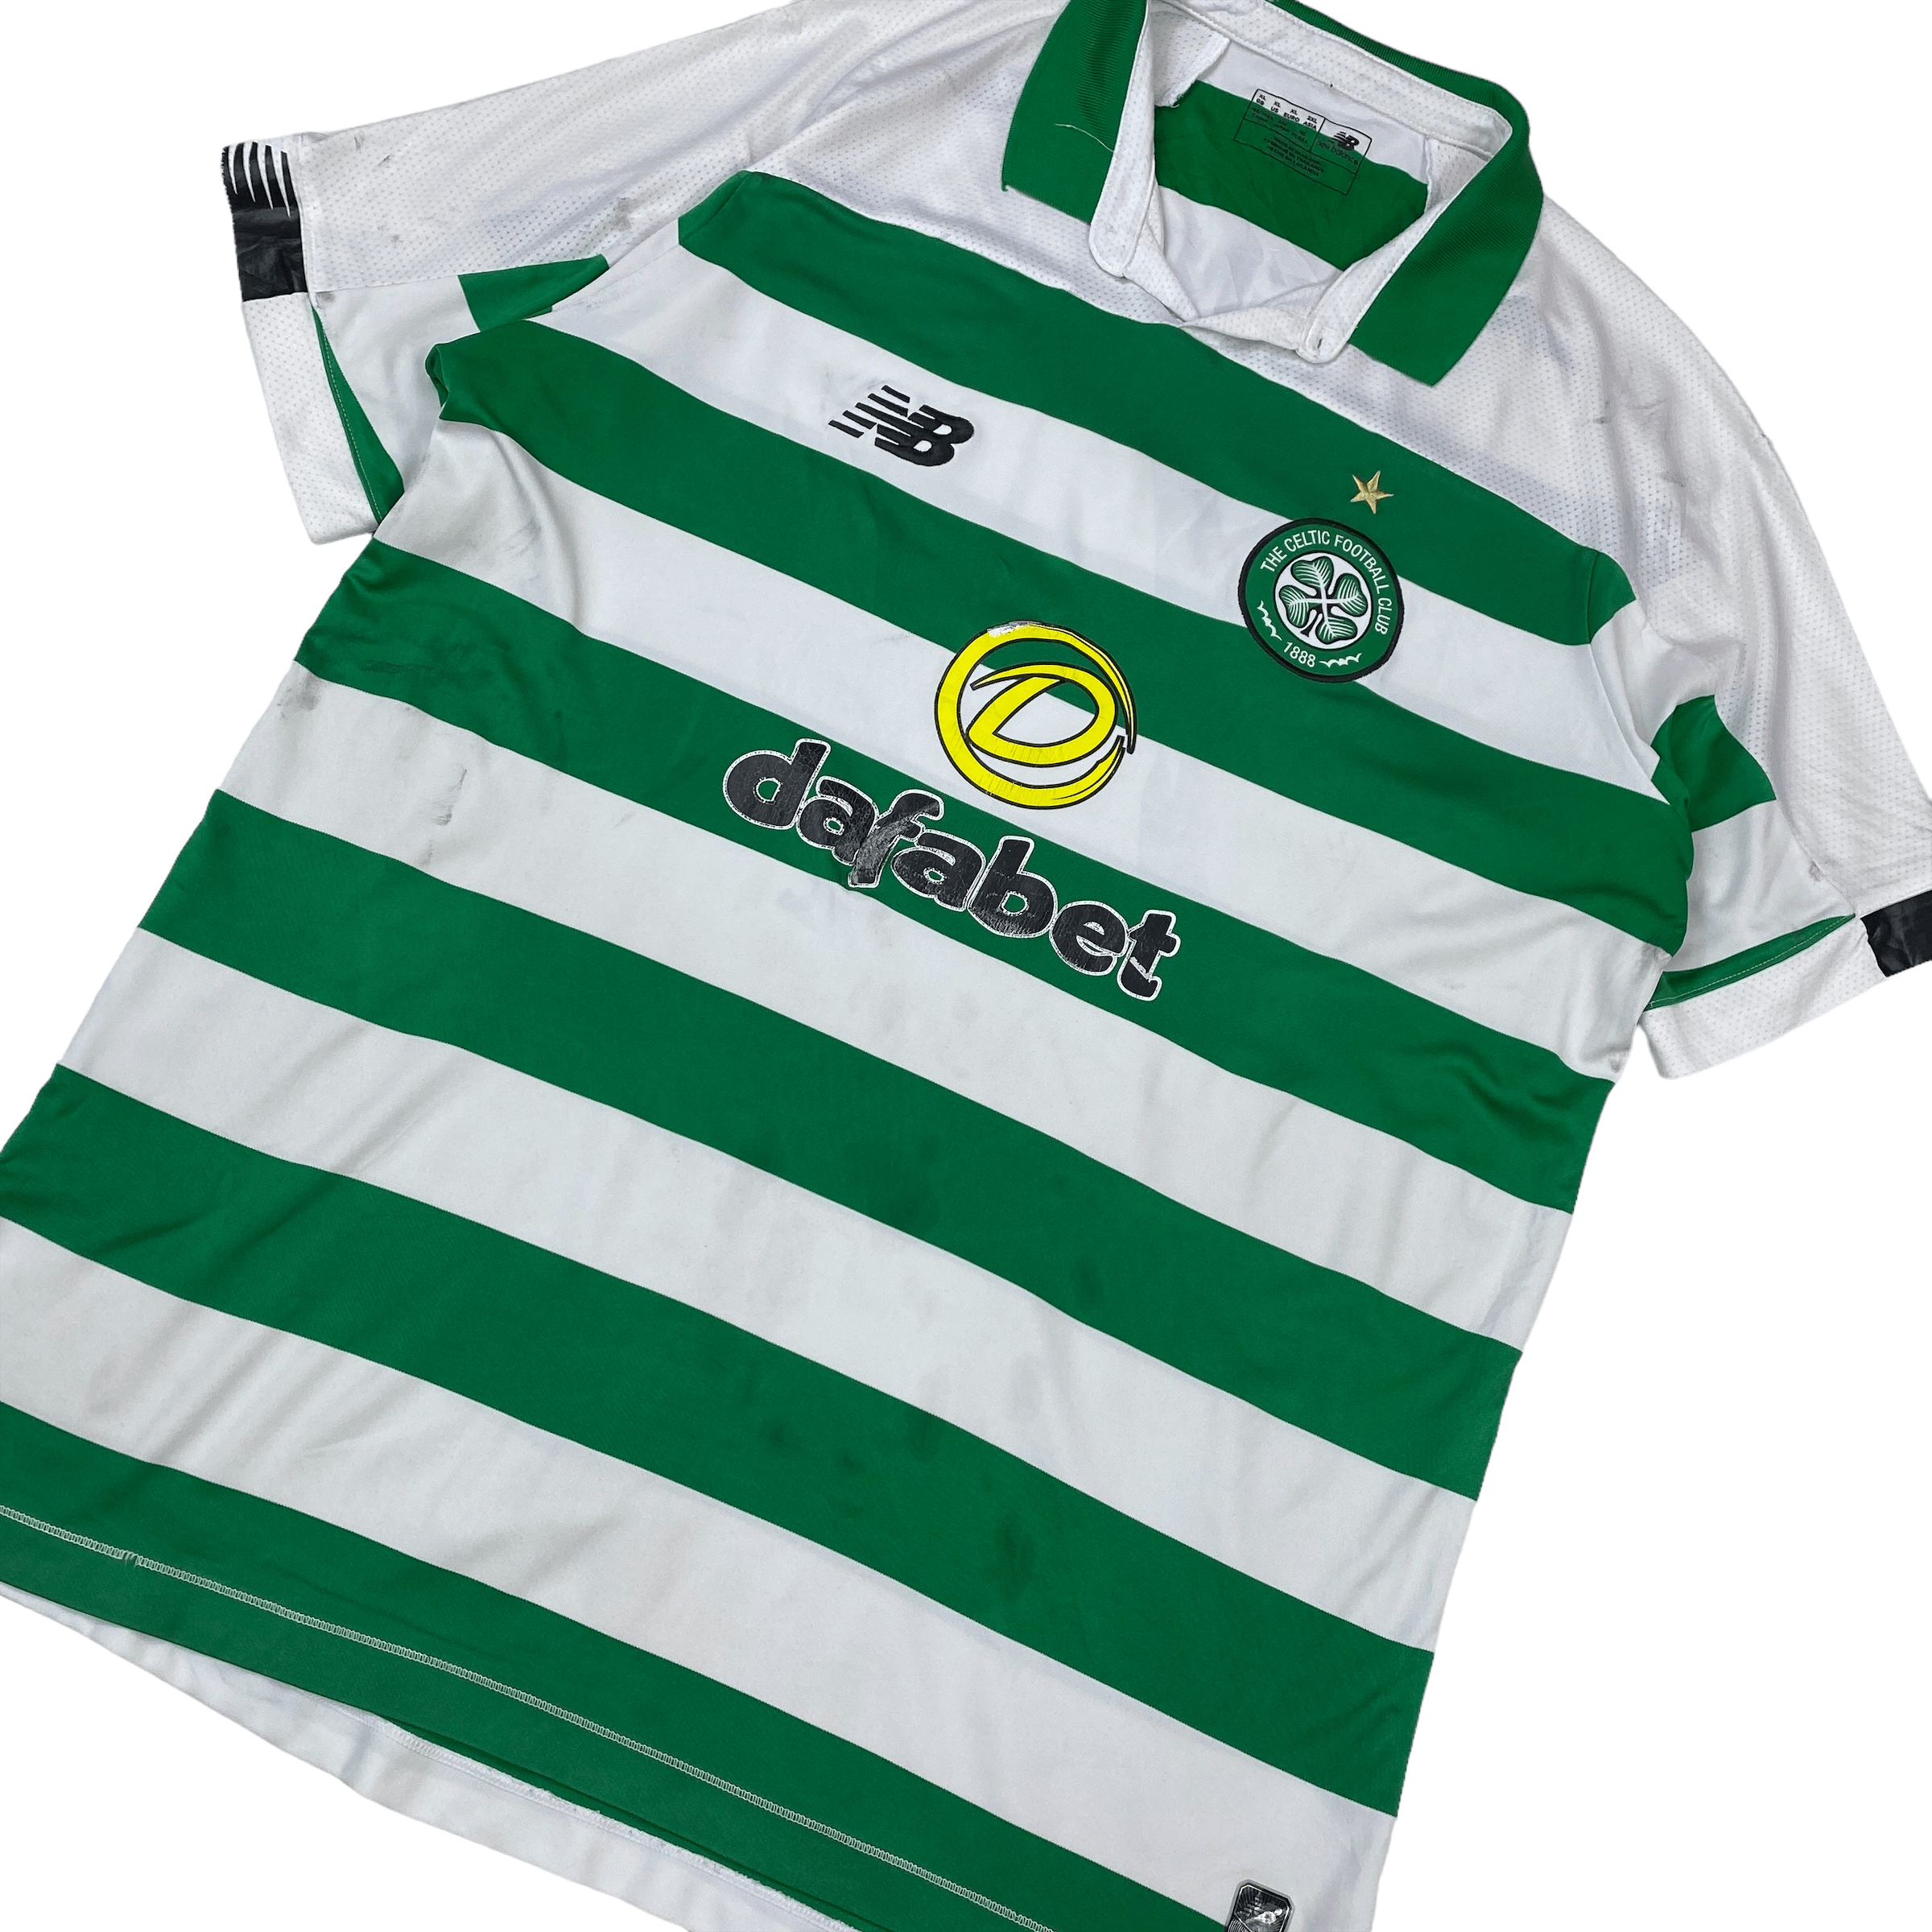 Celtic 2018 - 2019 home football shirt jersey New Balance size L